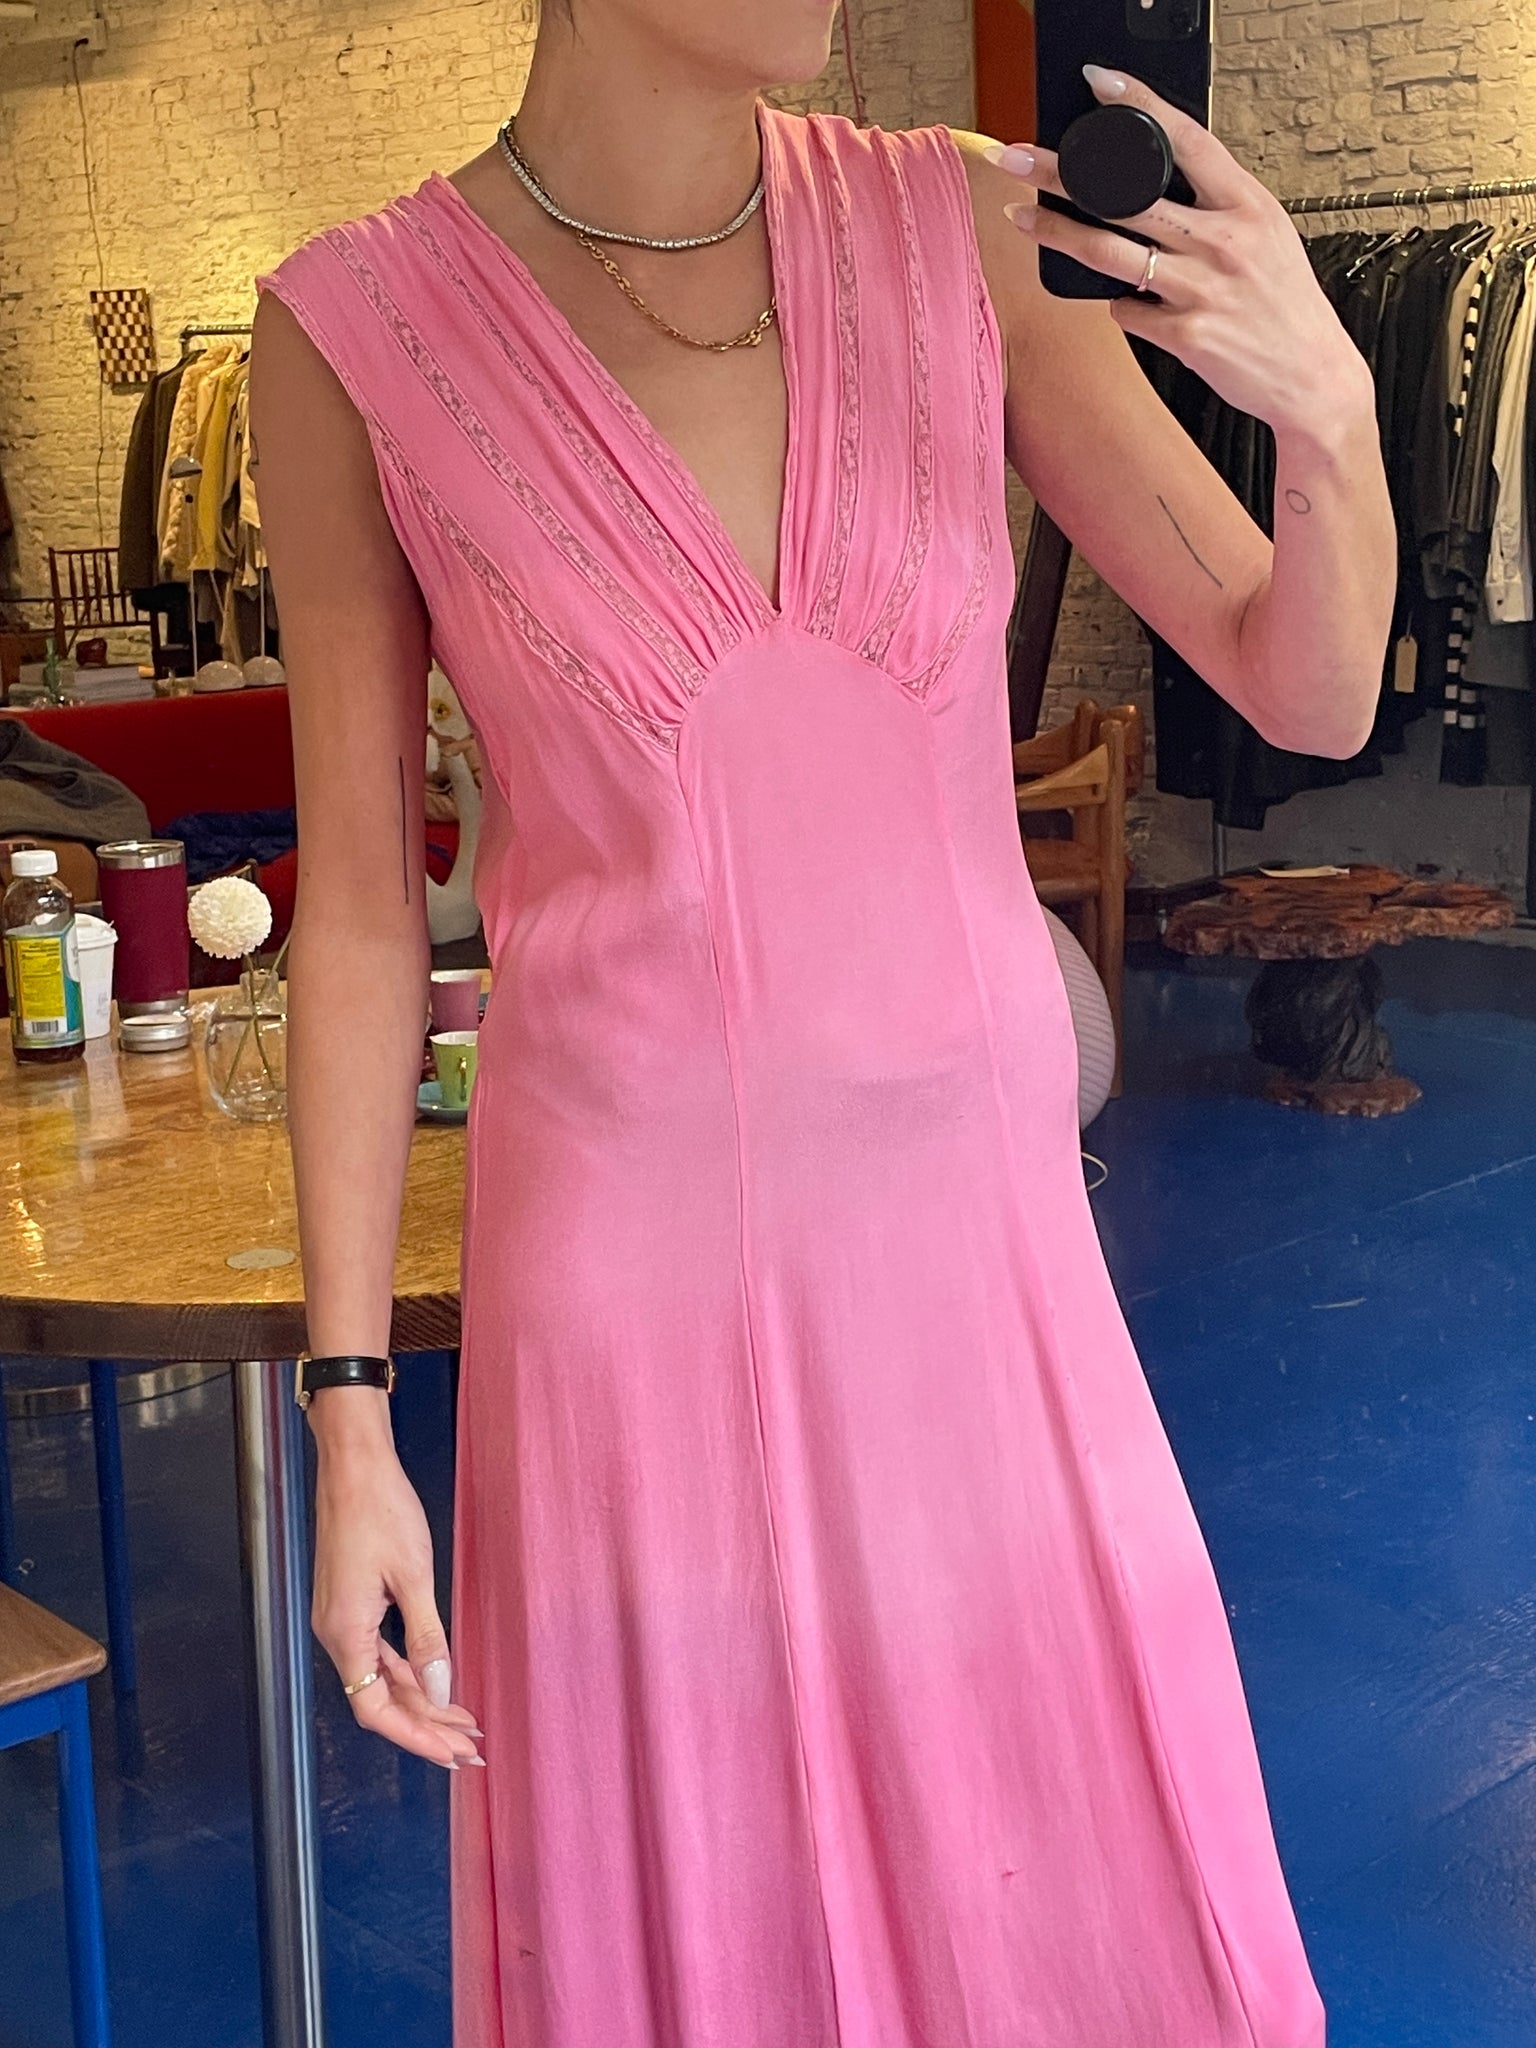 Vintage hand-dyed slip dress